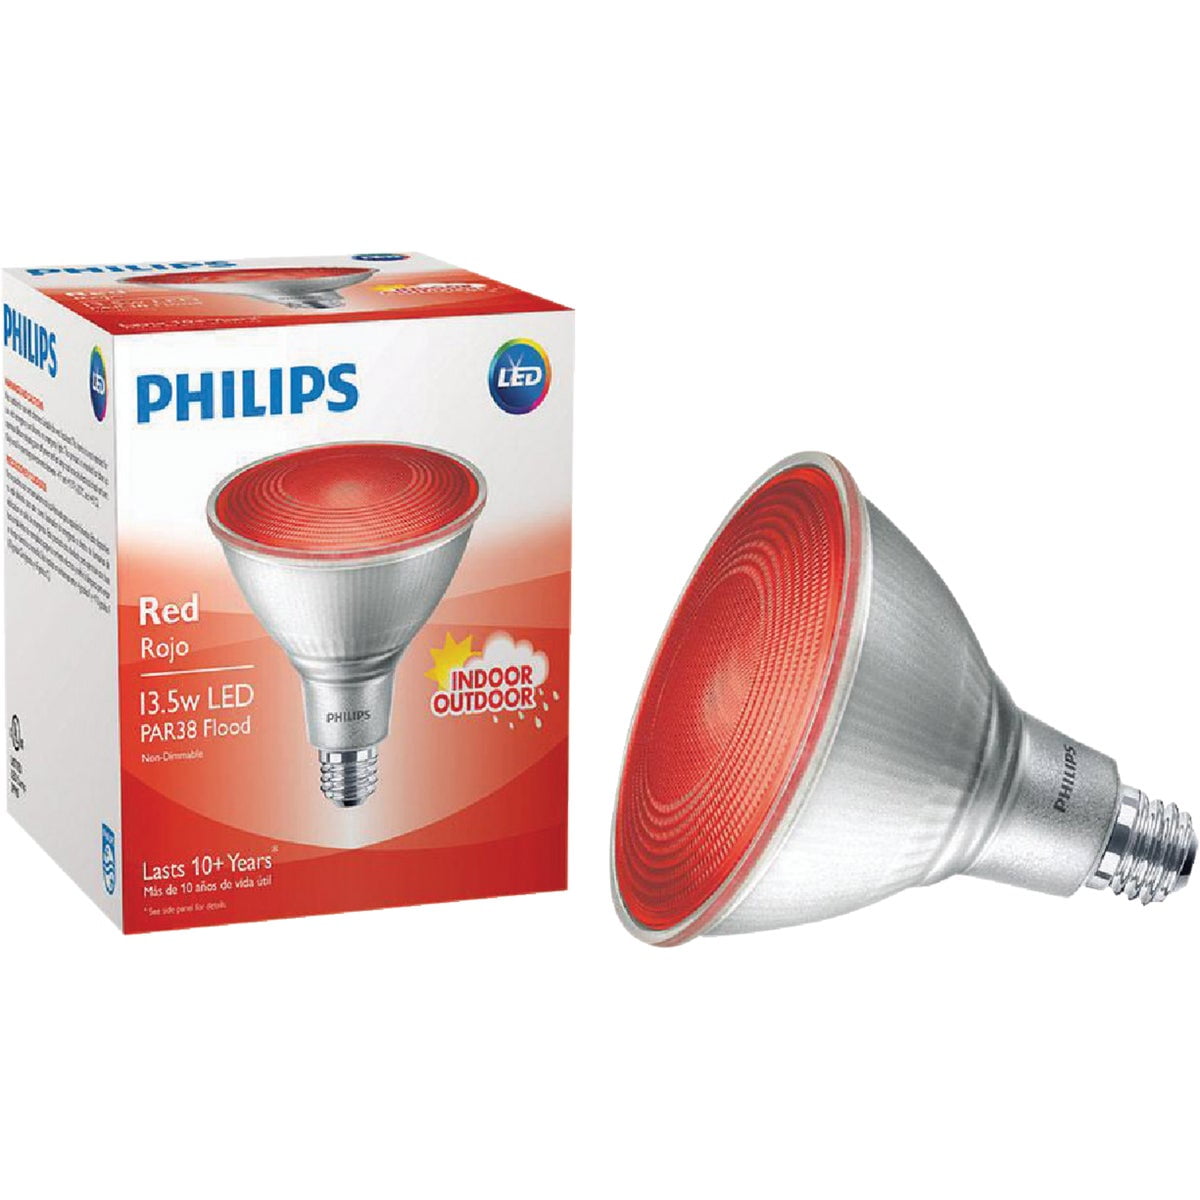 Philips 100W Equivalent Red PAR38 Medium LED Floodlight Light Bulb .